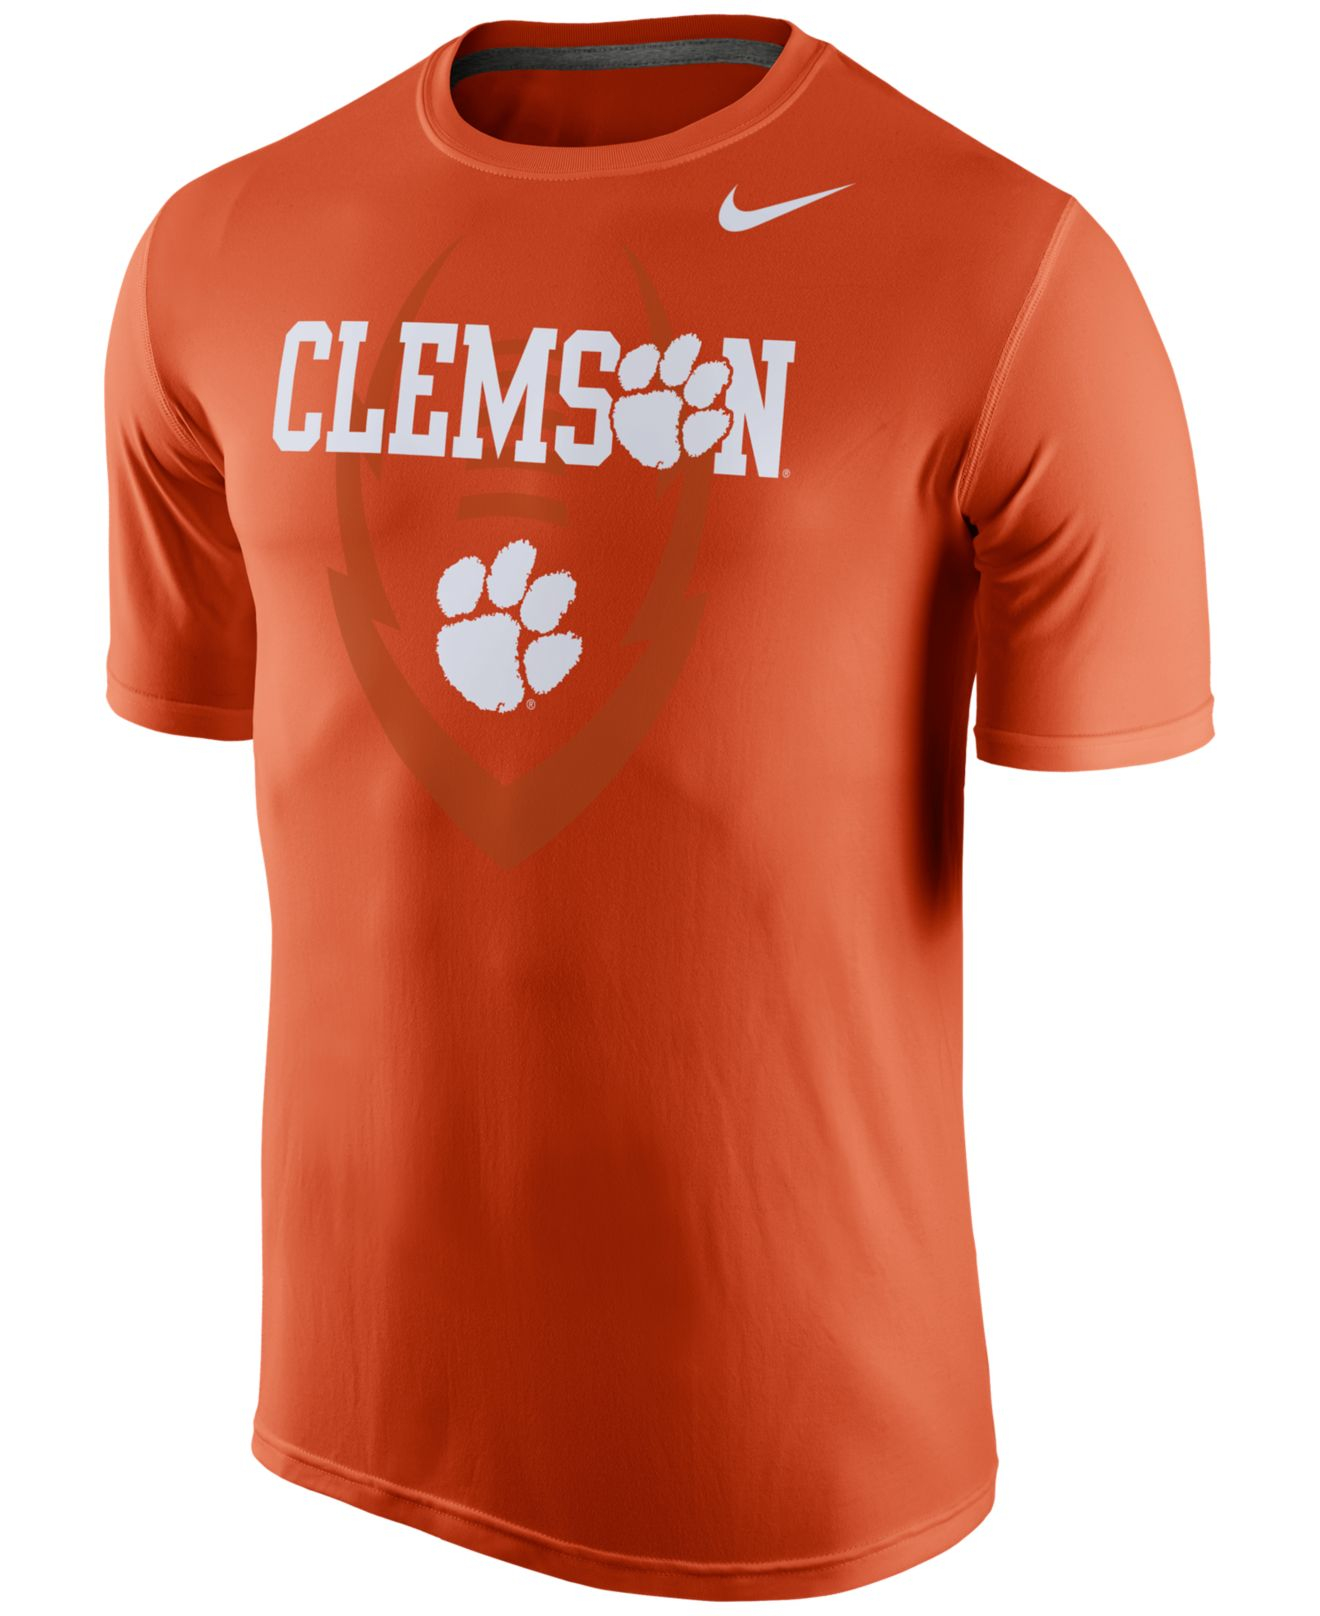 Lyst - Nike Men's Clemson Tigers Dri-fit T-shirt in Orange for Men